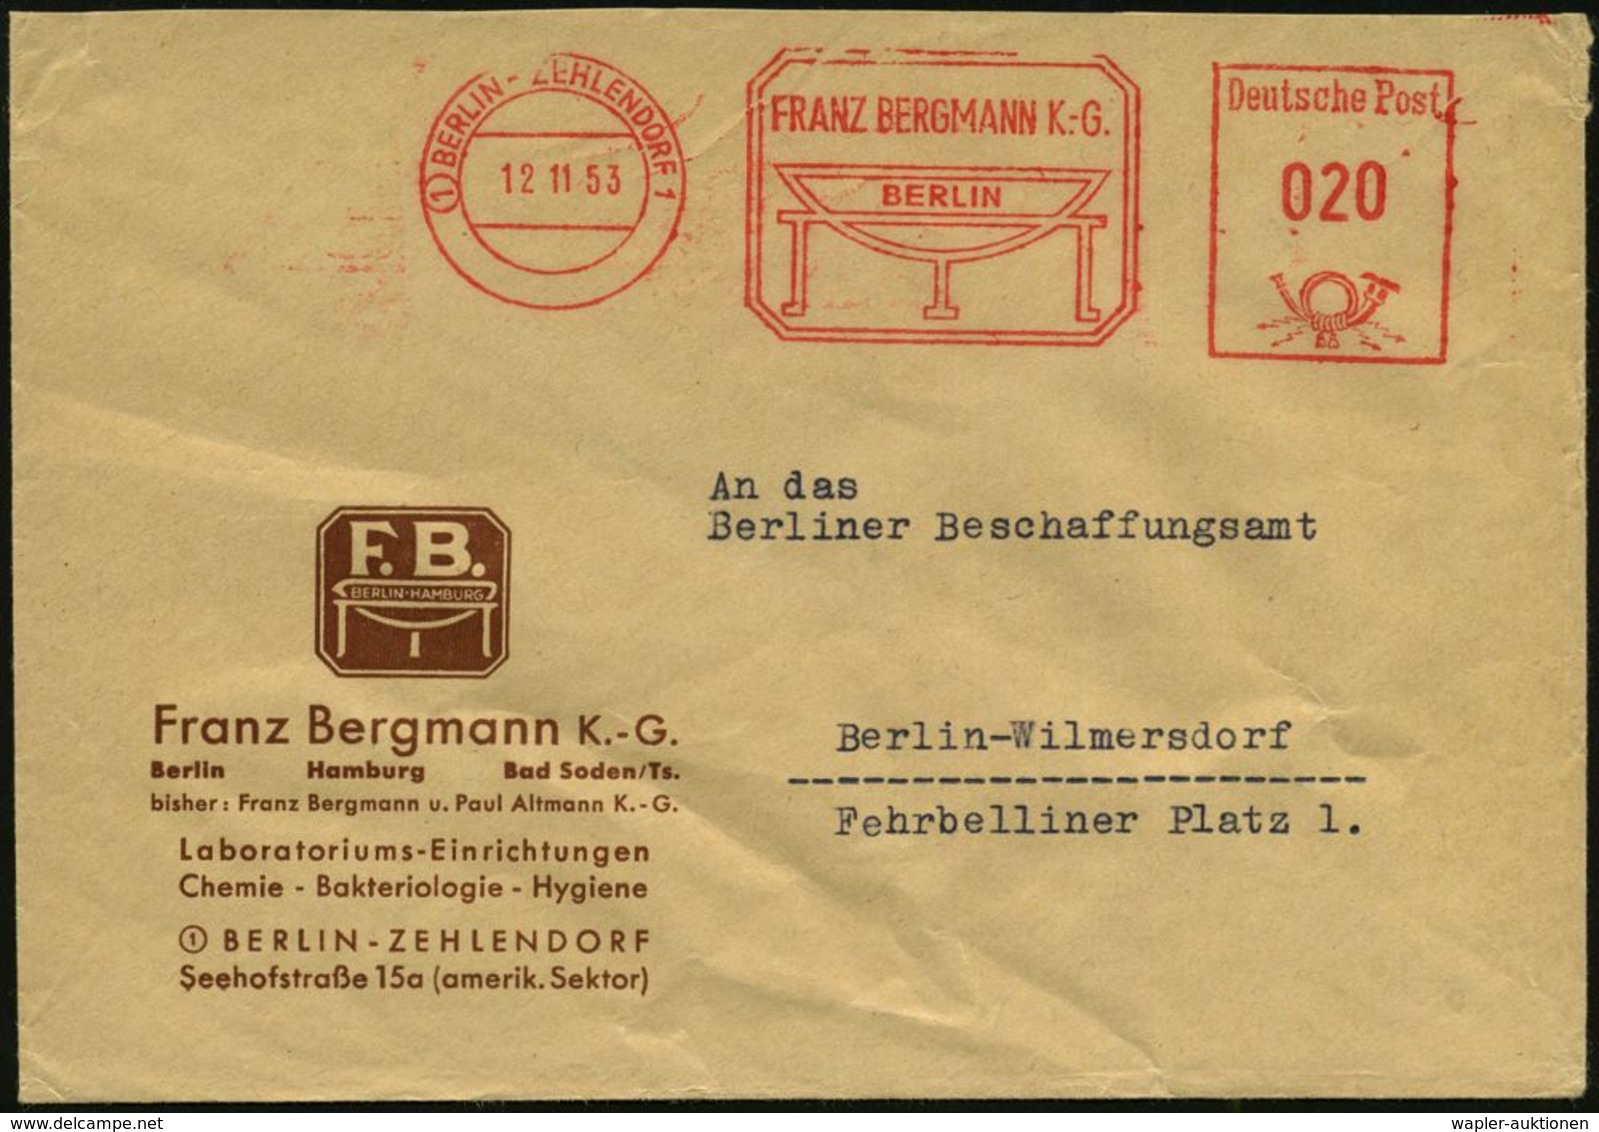 MEDIZINISCHE AUSRÜSTUNG & INSTRUMENTE : (1) BERLIN-ZEHLENDORF 1/ FRANZ BERGMANN KG. 1953 (12.11.) AFS (Schalen-Logo) Mot - Medizin